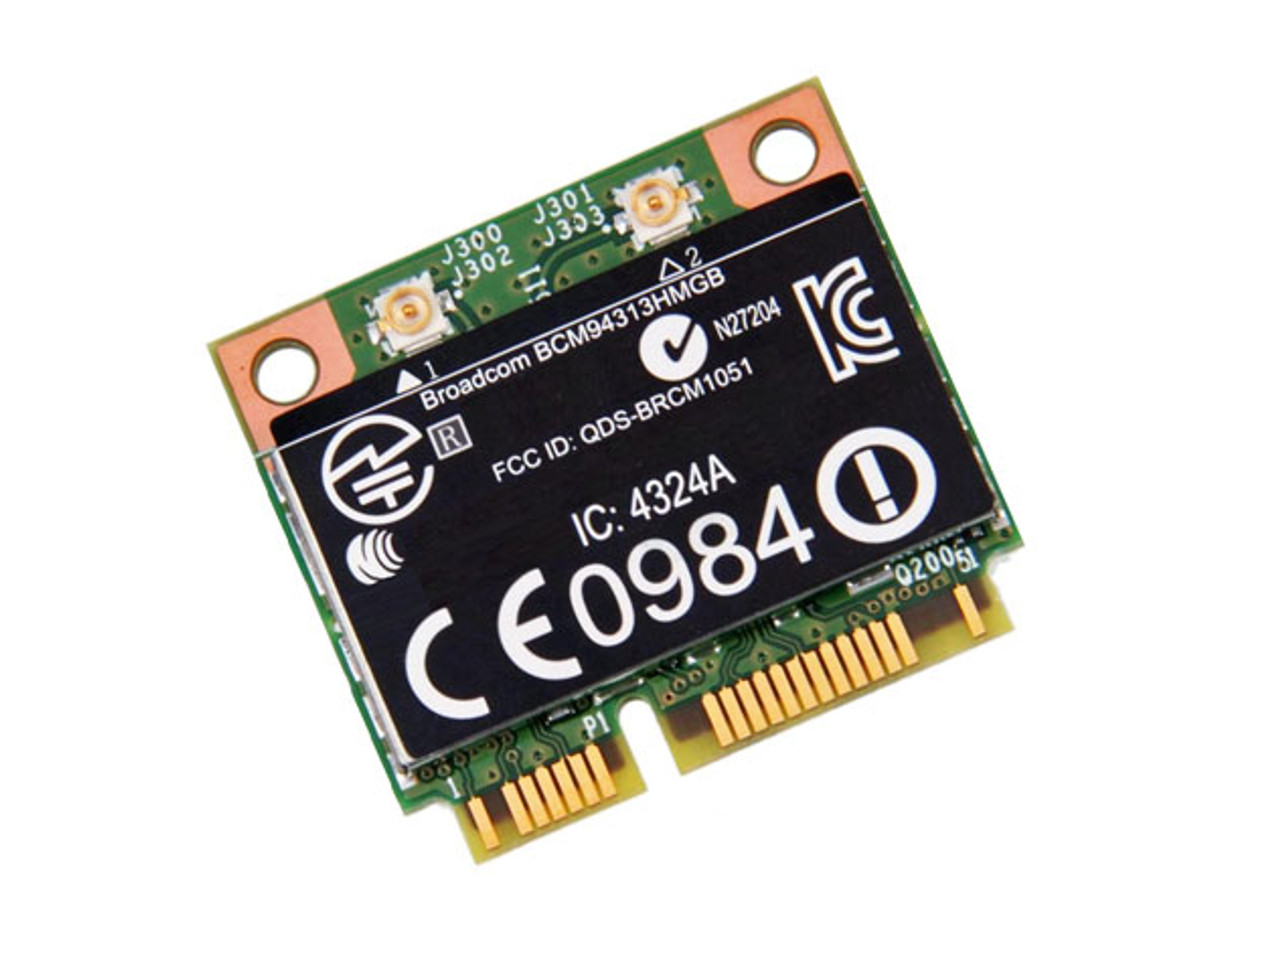 Rt3290 802.11. Ralink rt3290 802.11BGN WIFI Adapter. Блютуз PCI-E. Ralink.